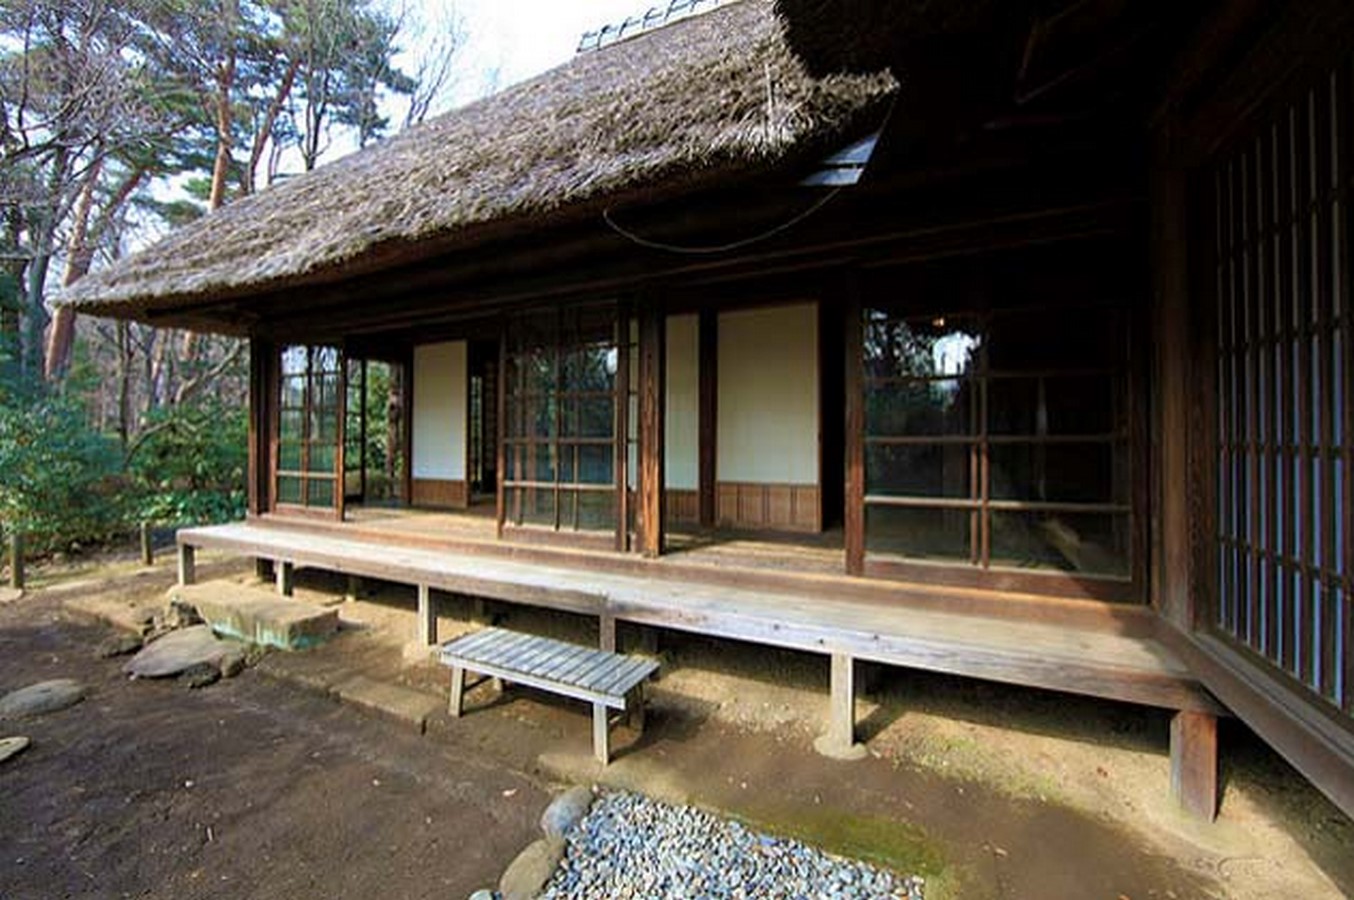  10 Elements of Japanese Architecture - Sheet6